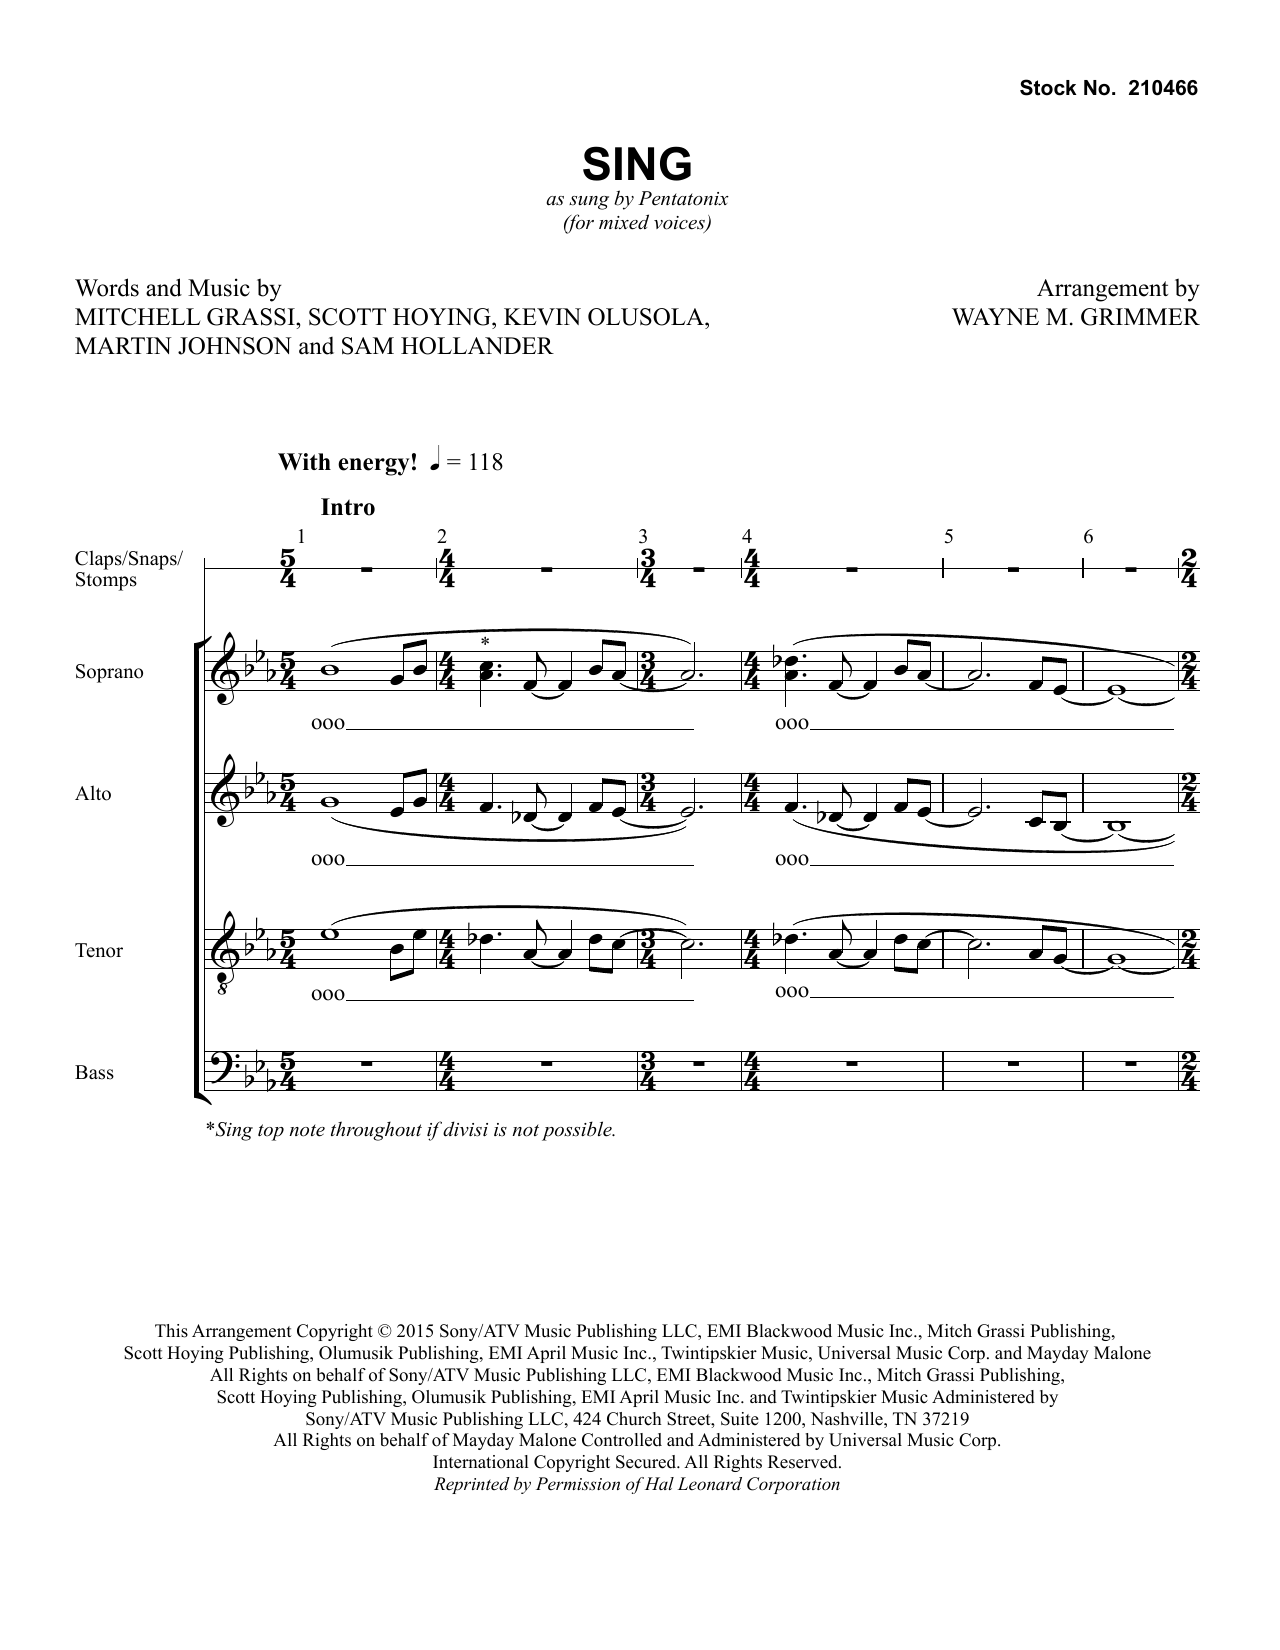 Pentatonix Sing (arr. Wayne Grimmer) Sheet Music Notes & Chords for TTBB Choir - Download or Print PDF